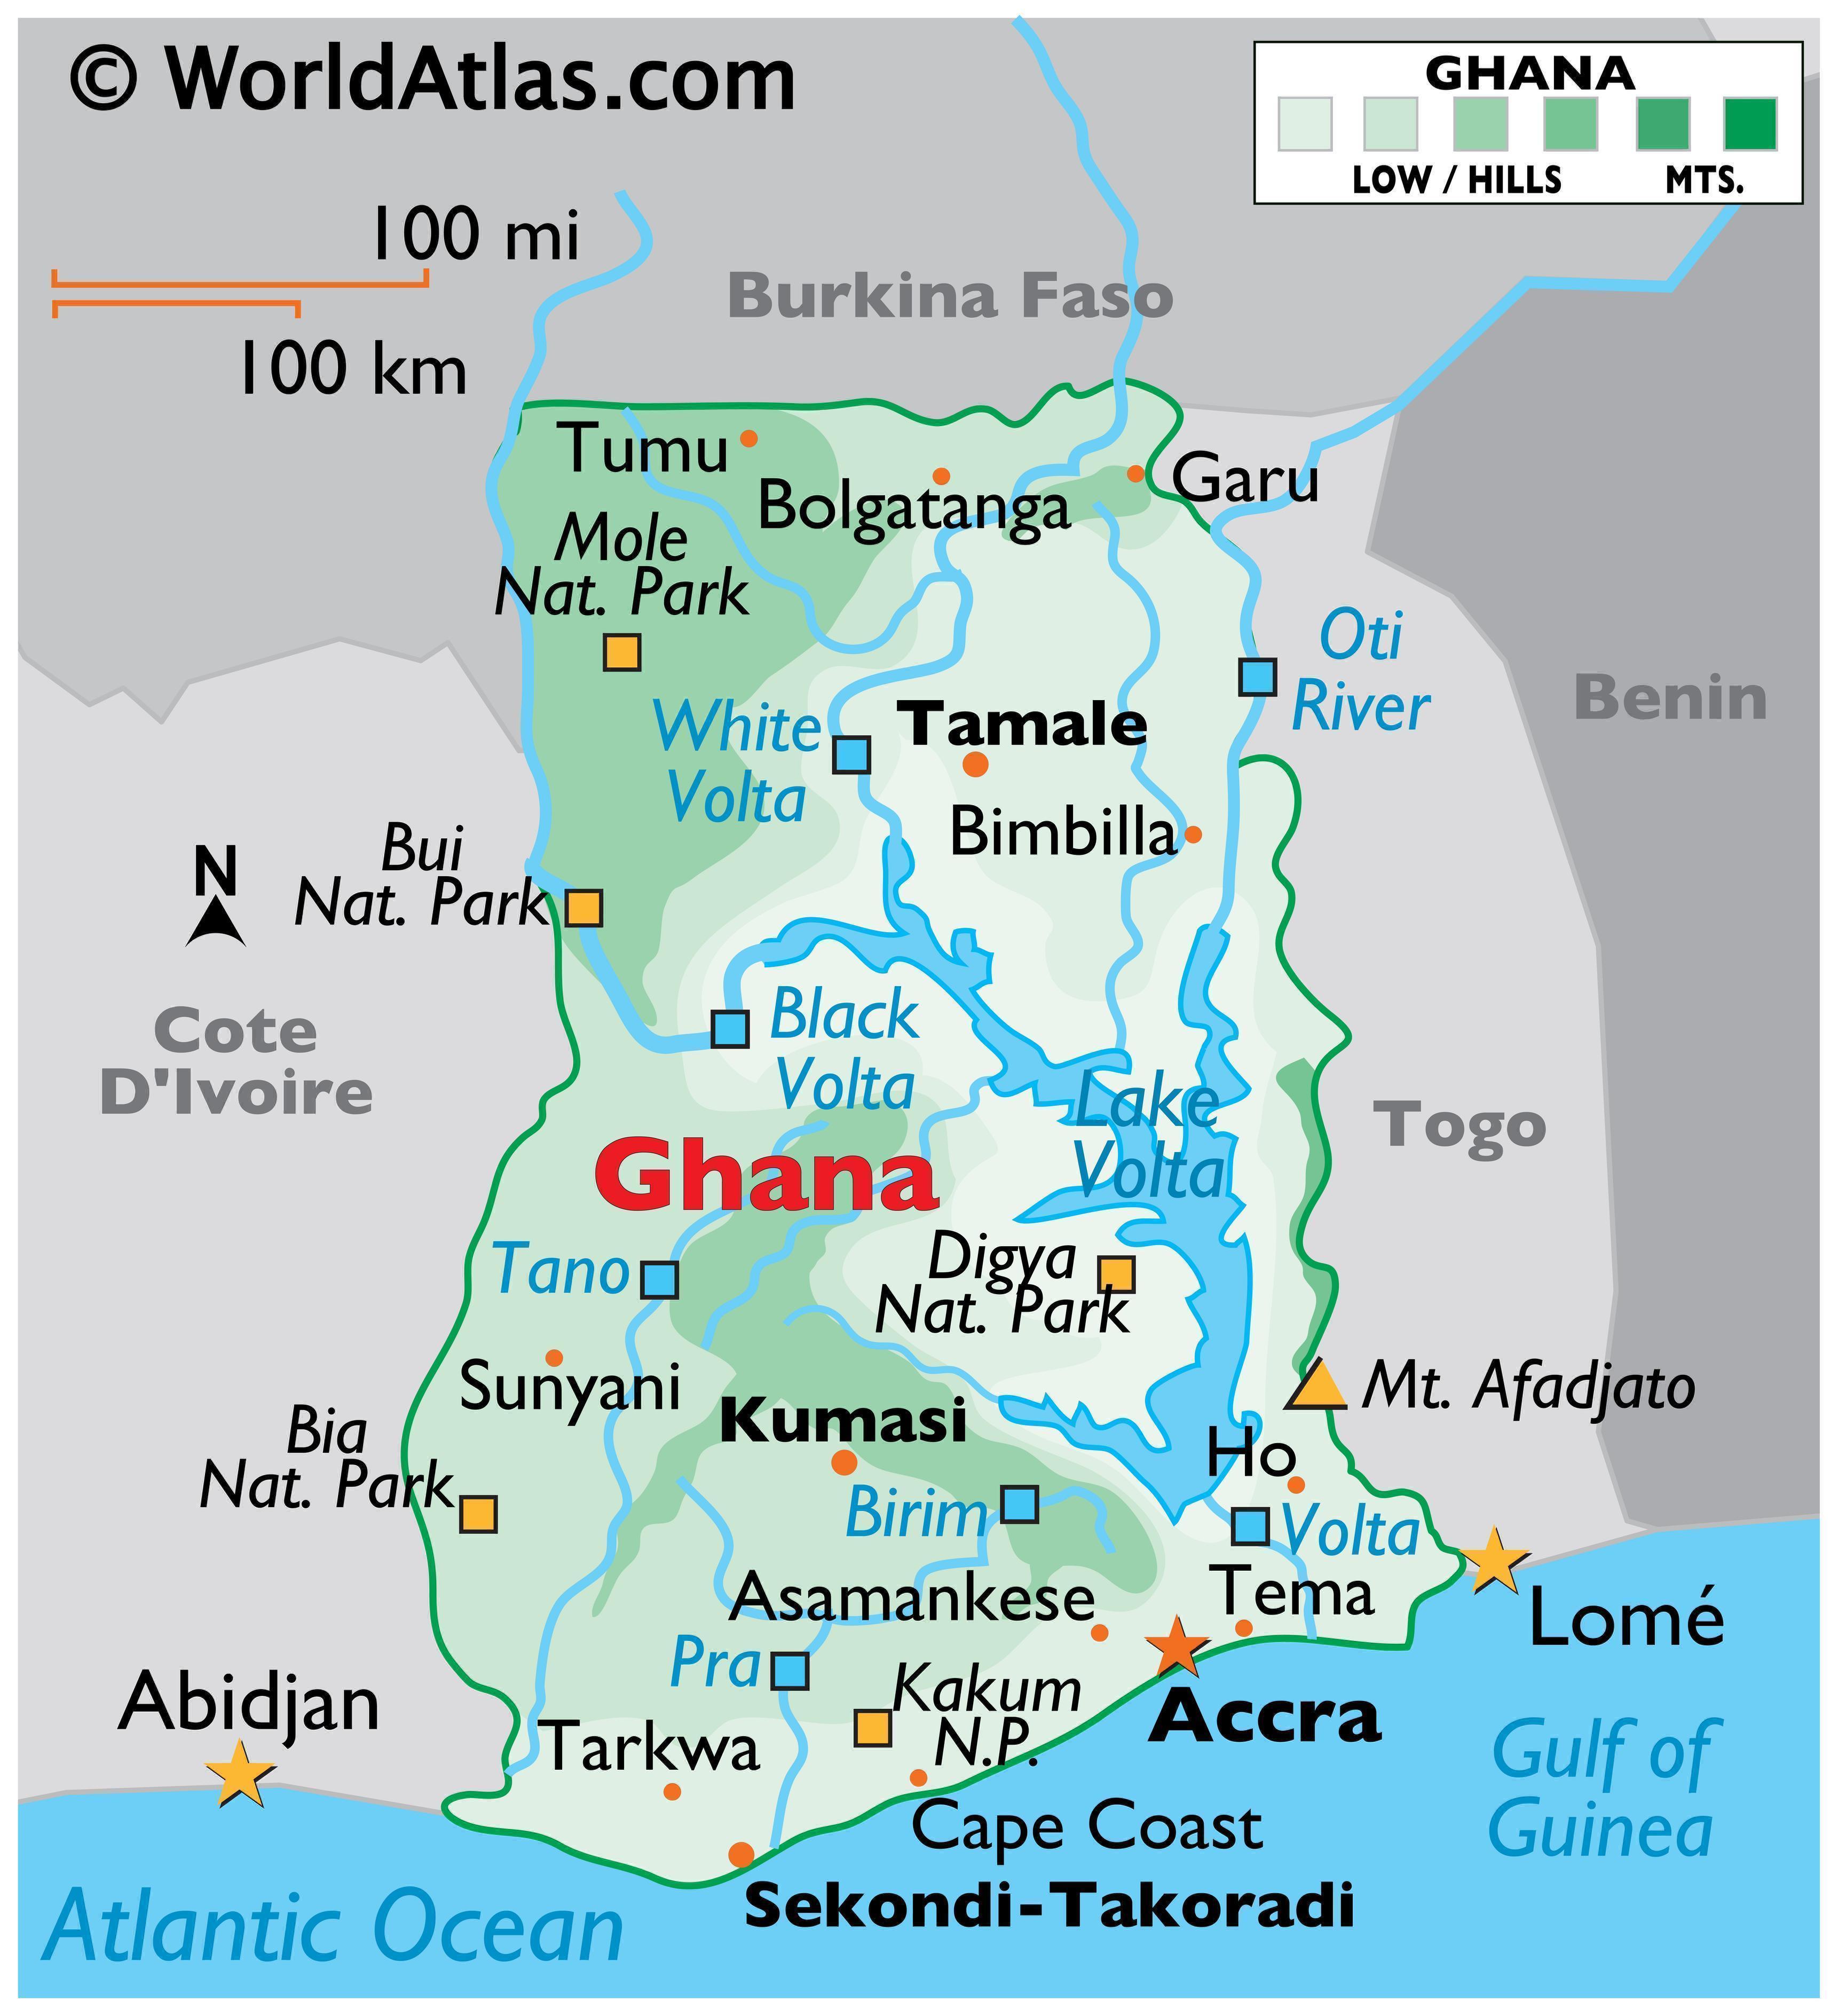 Geography of Ghana - Wikipedia